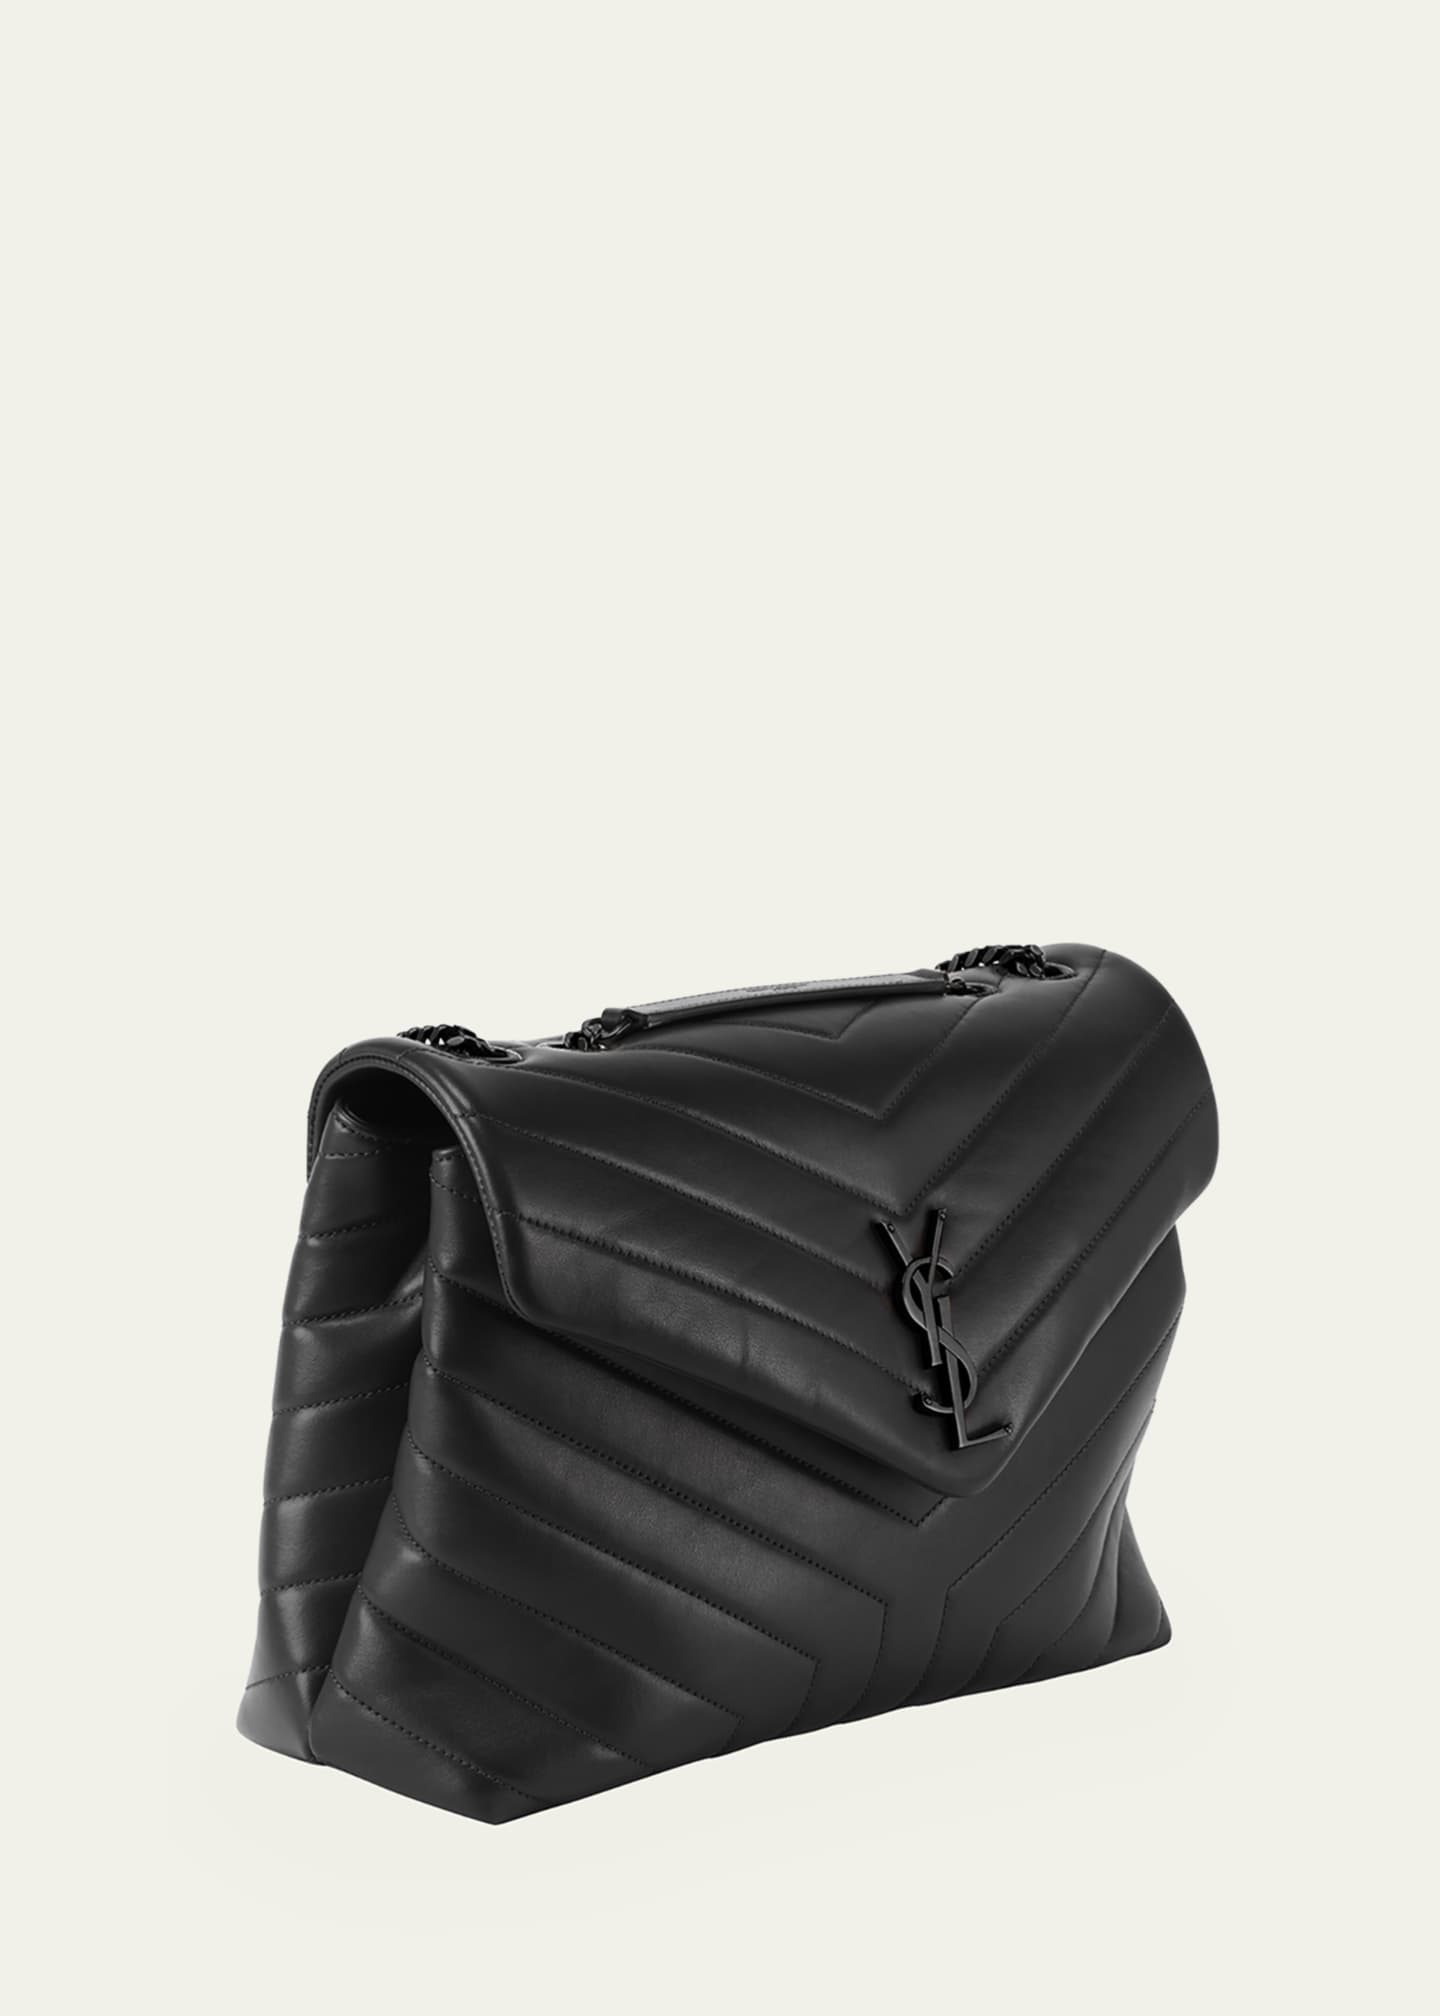 Saint Laurent Loulou Medium YSL Shoulder Bag in Quilted Leather Image 2 of 5